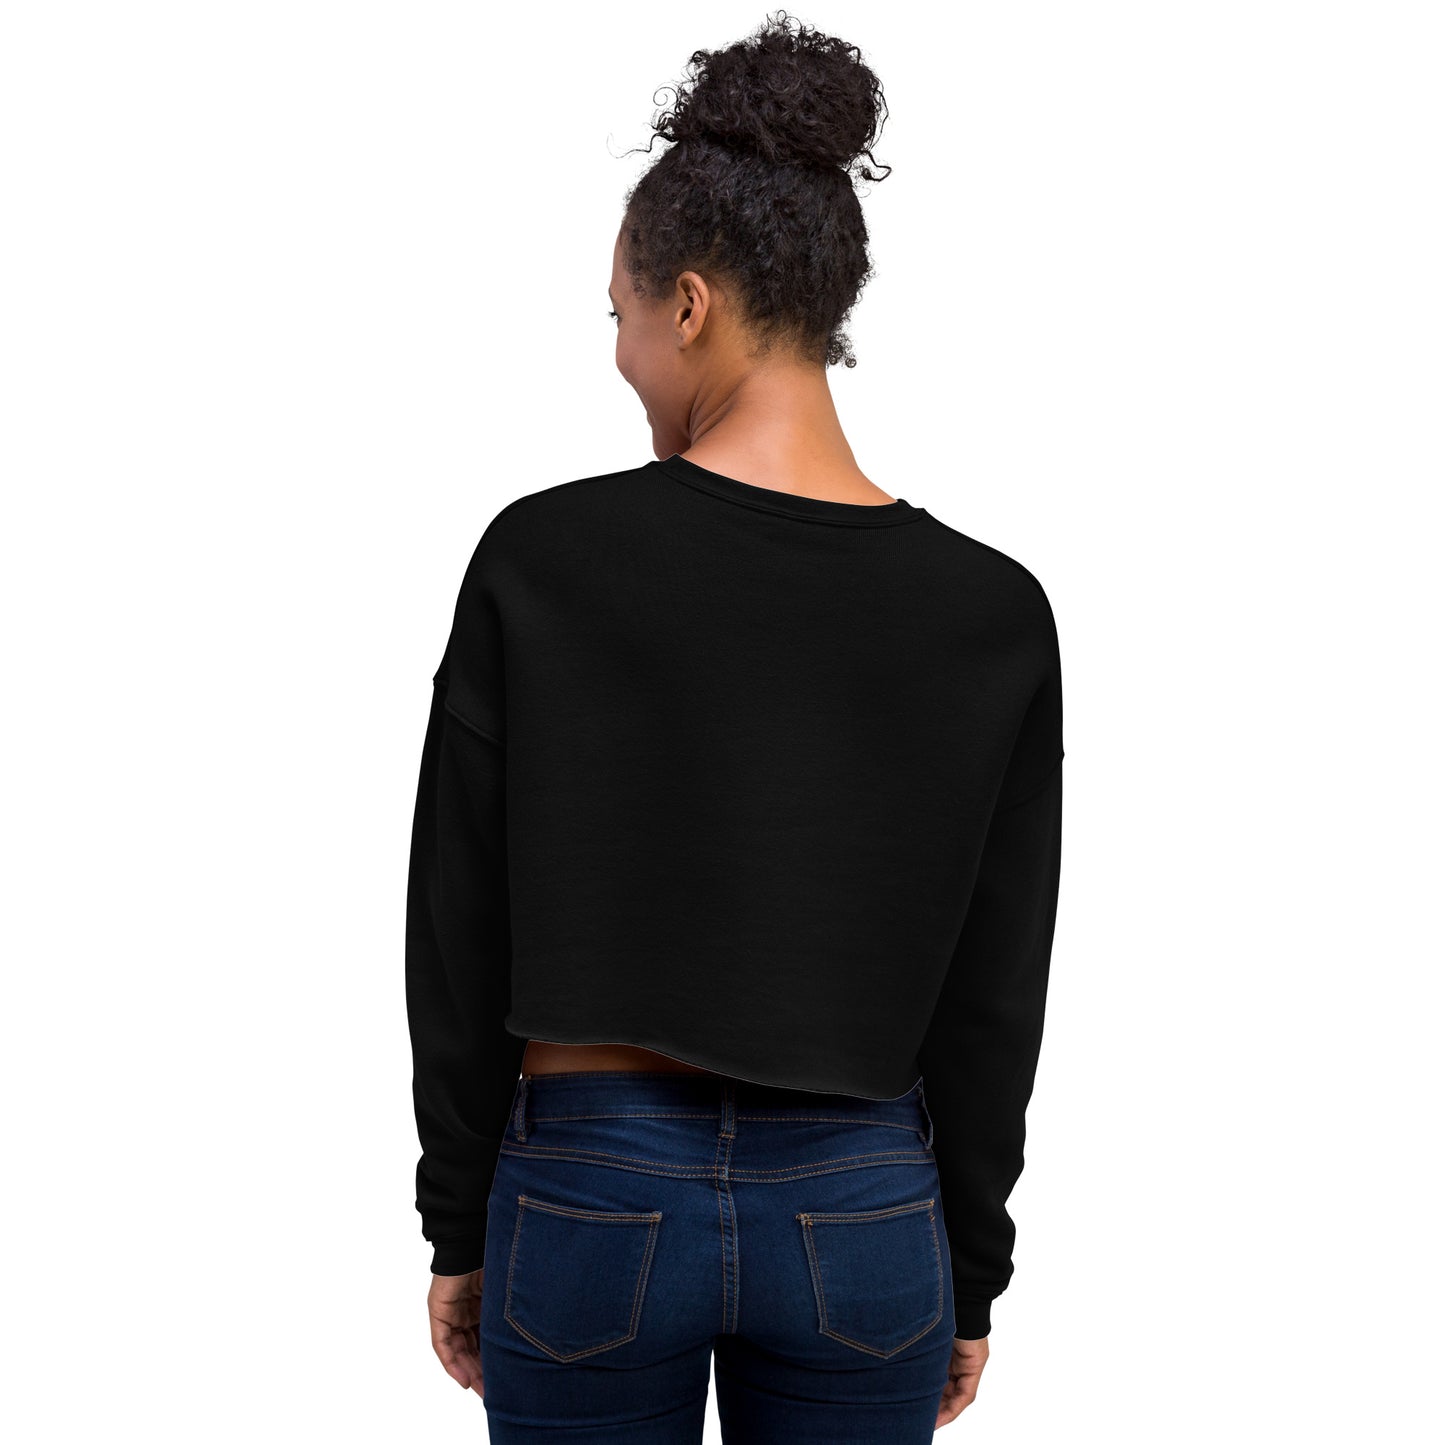 Crop Sweatshirt Womens (Body Positive Babe - Inspiration 005)